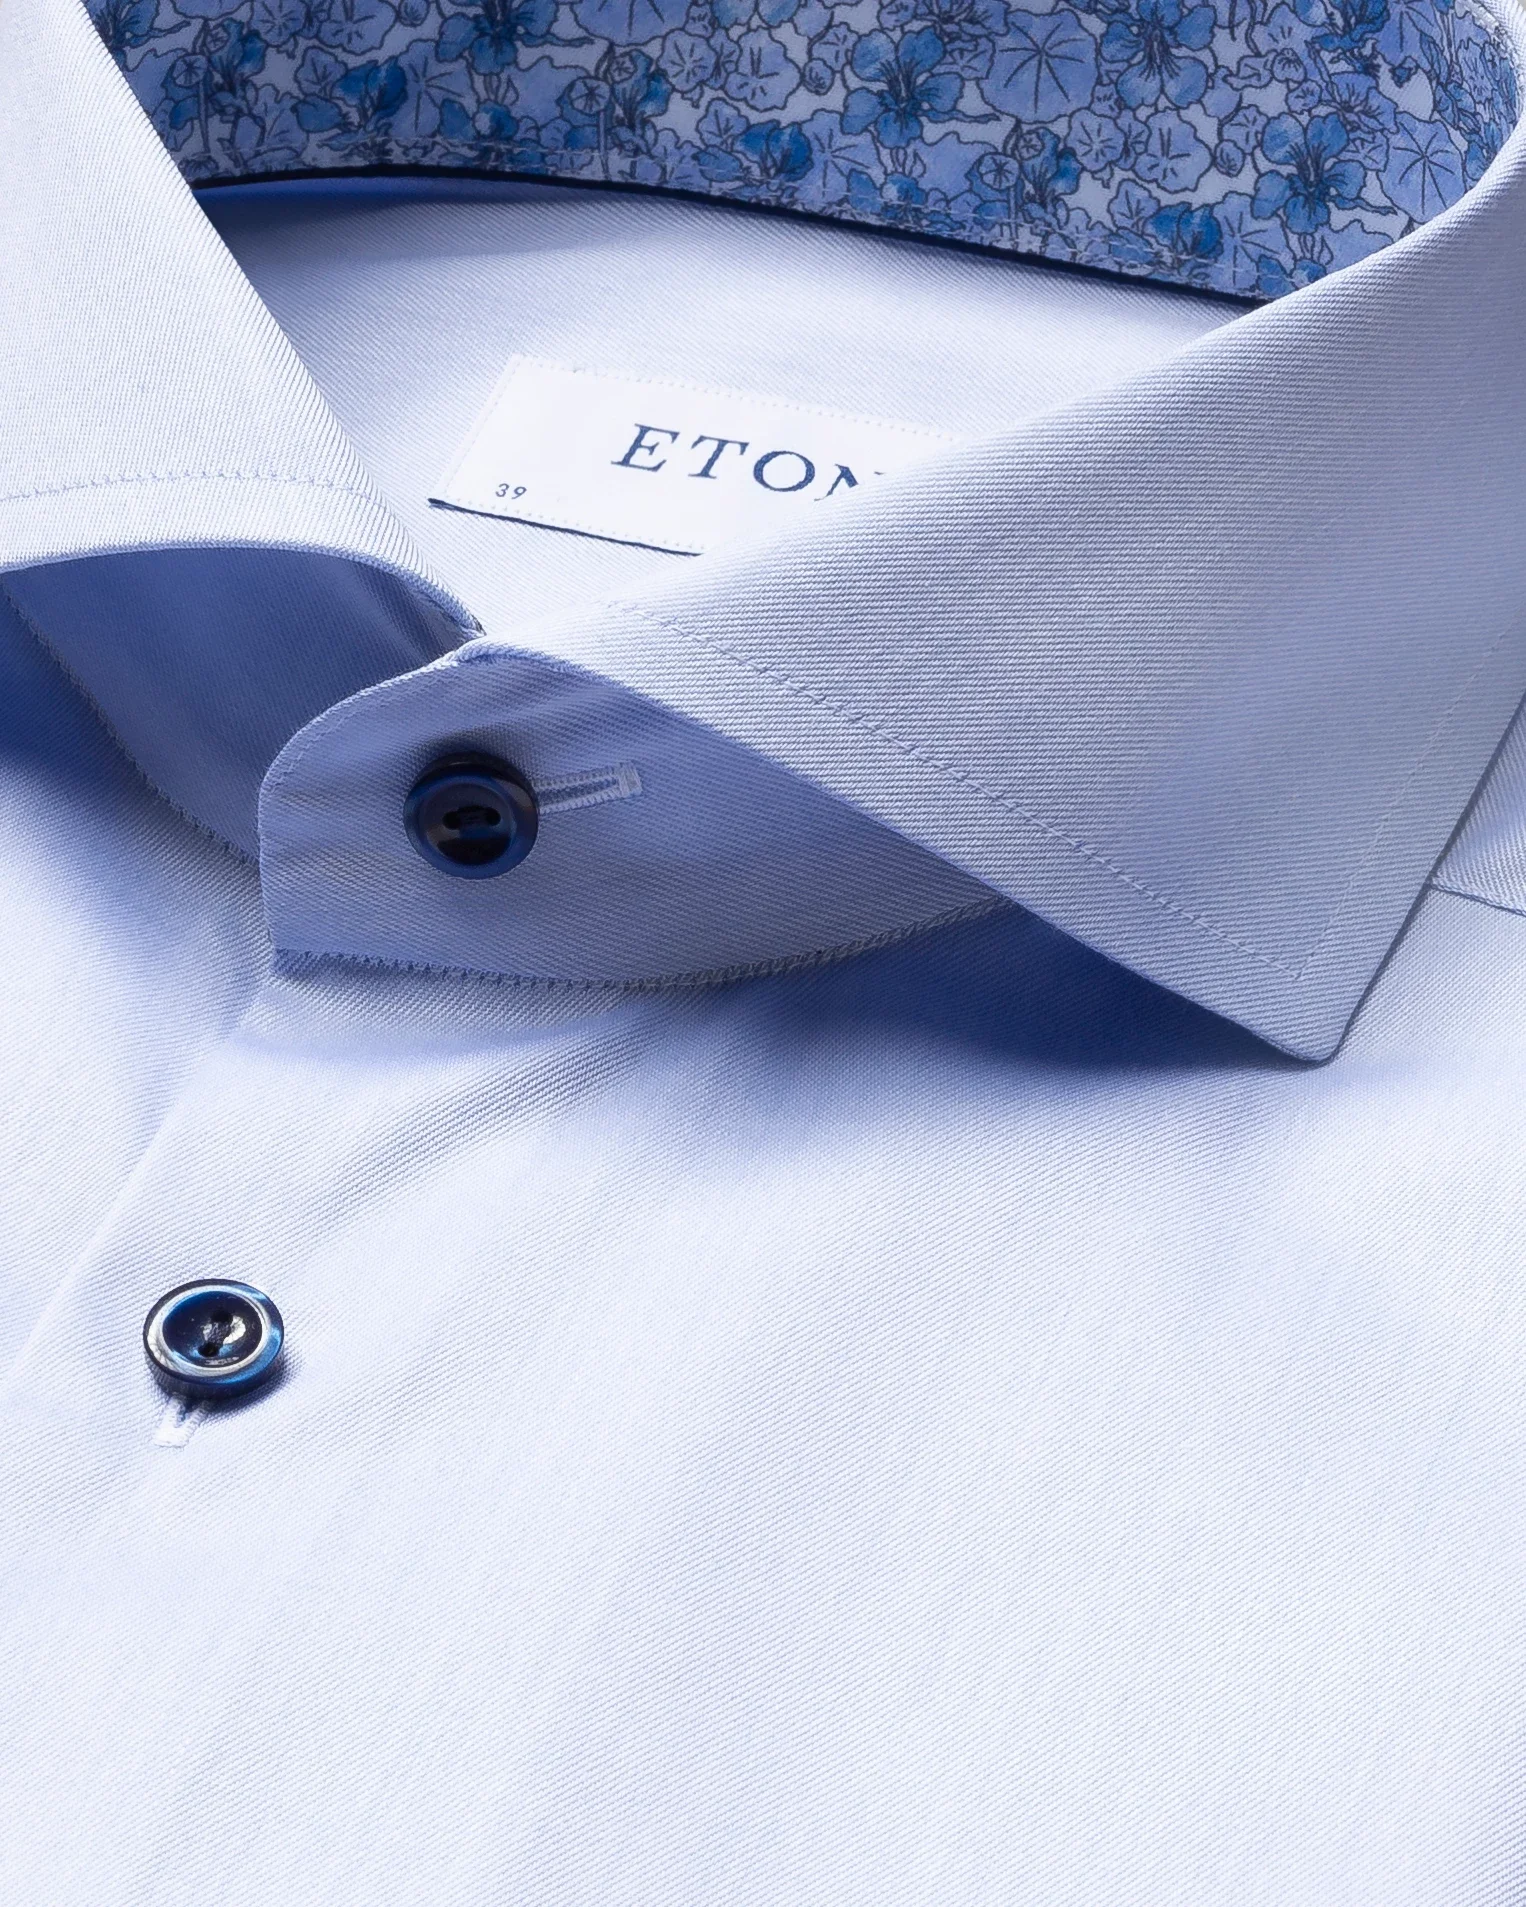 Eton - blue twill shirt blue details extreme cut away